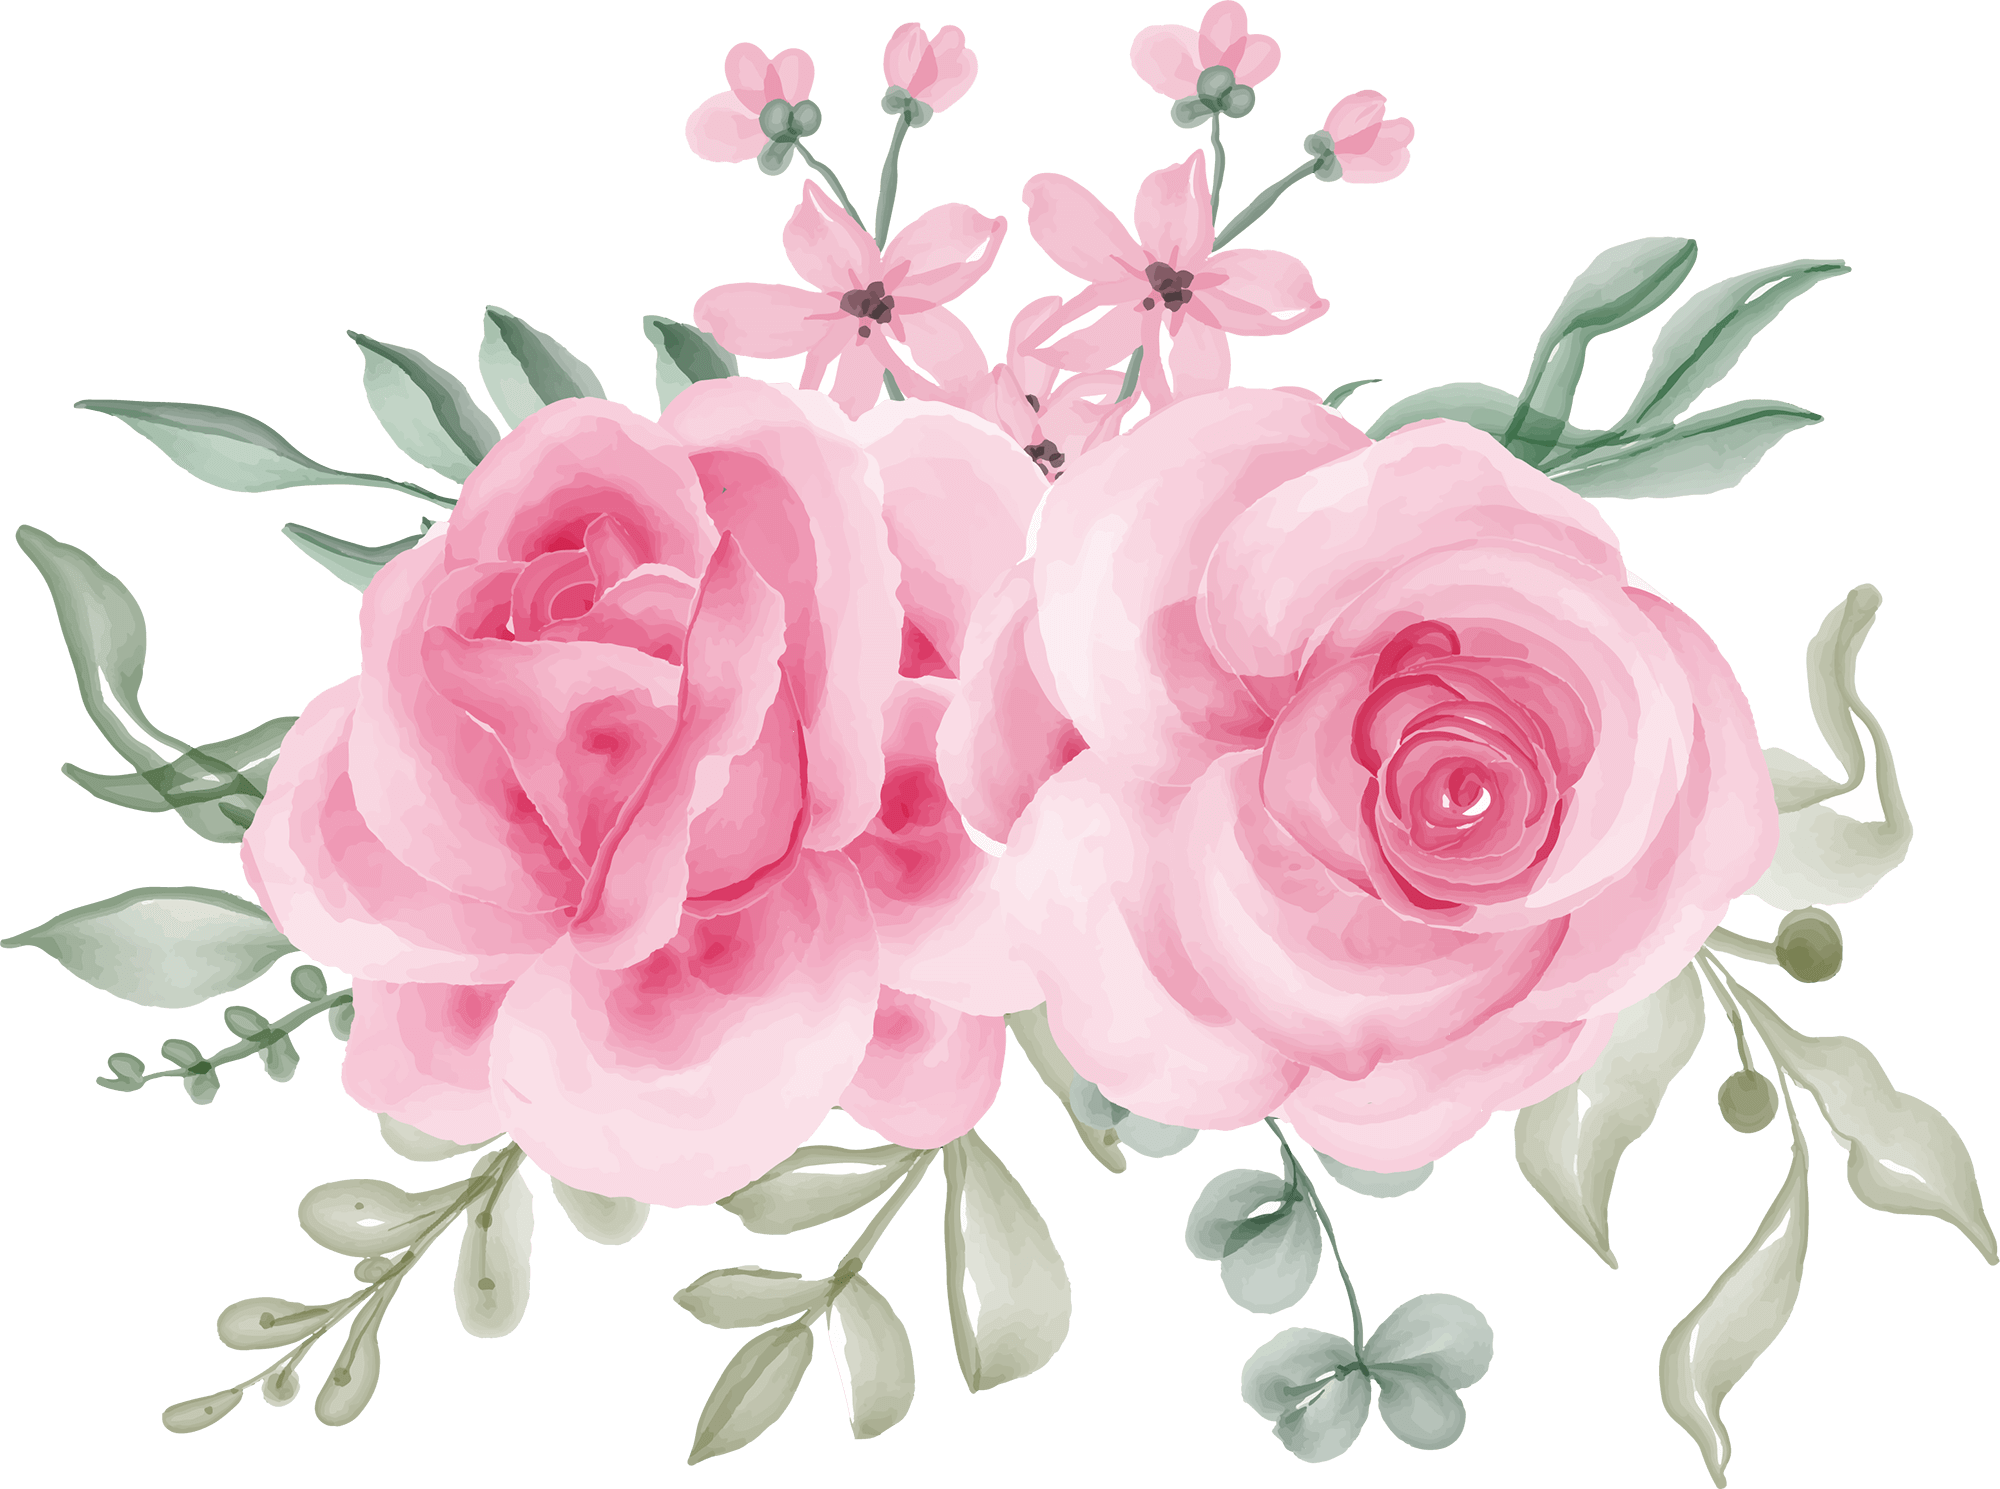 Rose Flower Clipart Rose Day Png - Rose Image Download Free